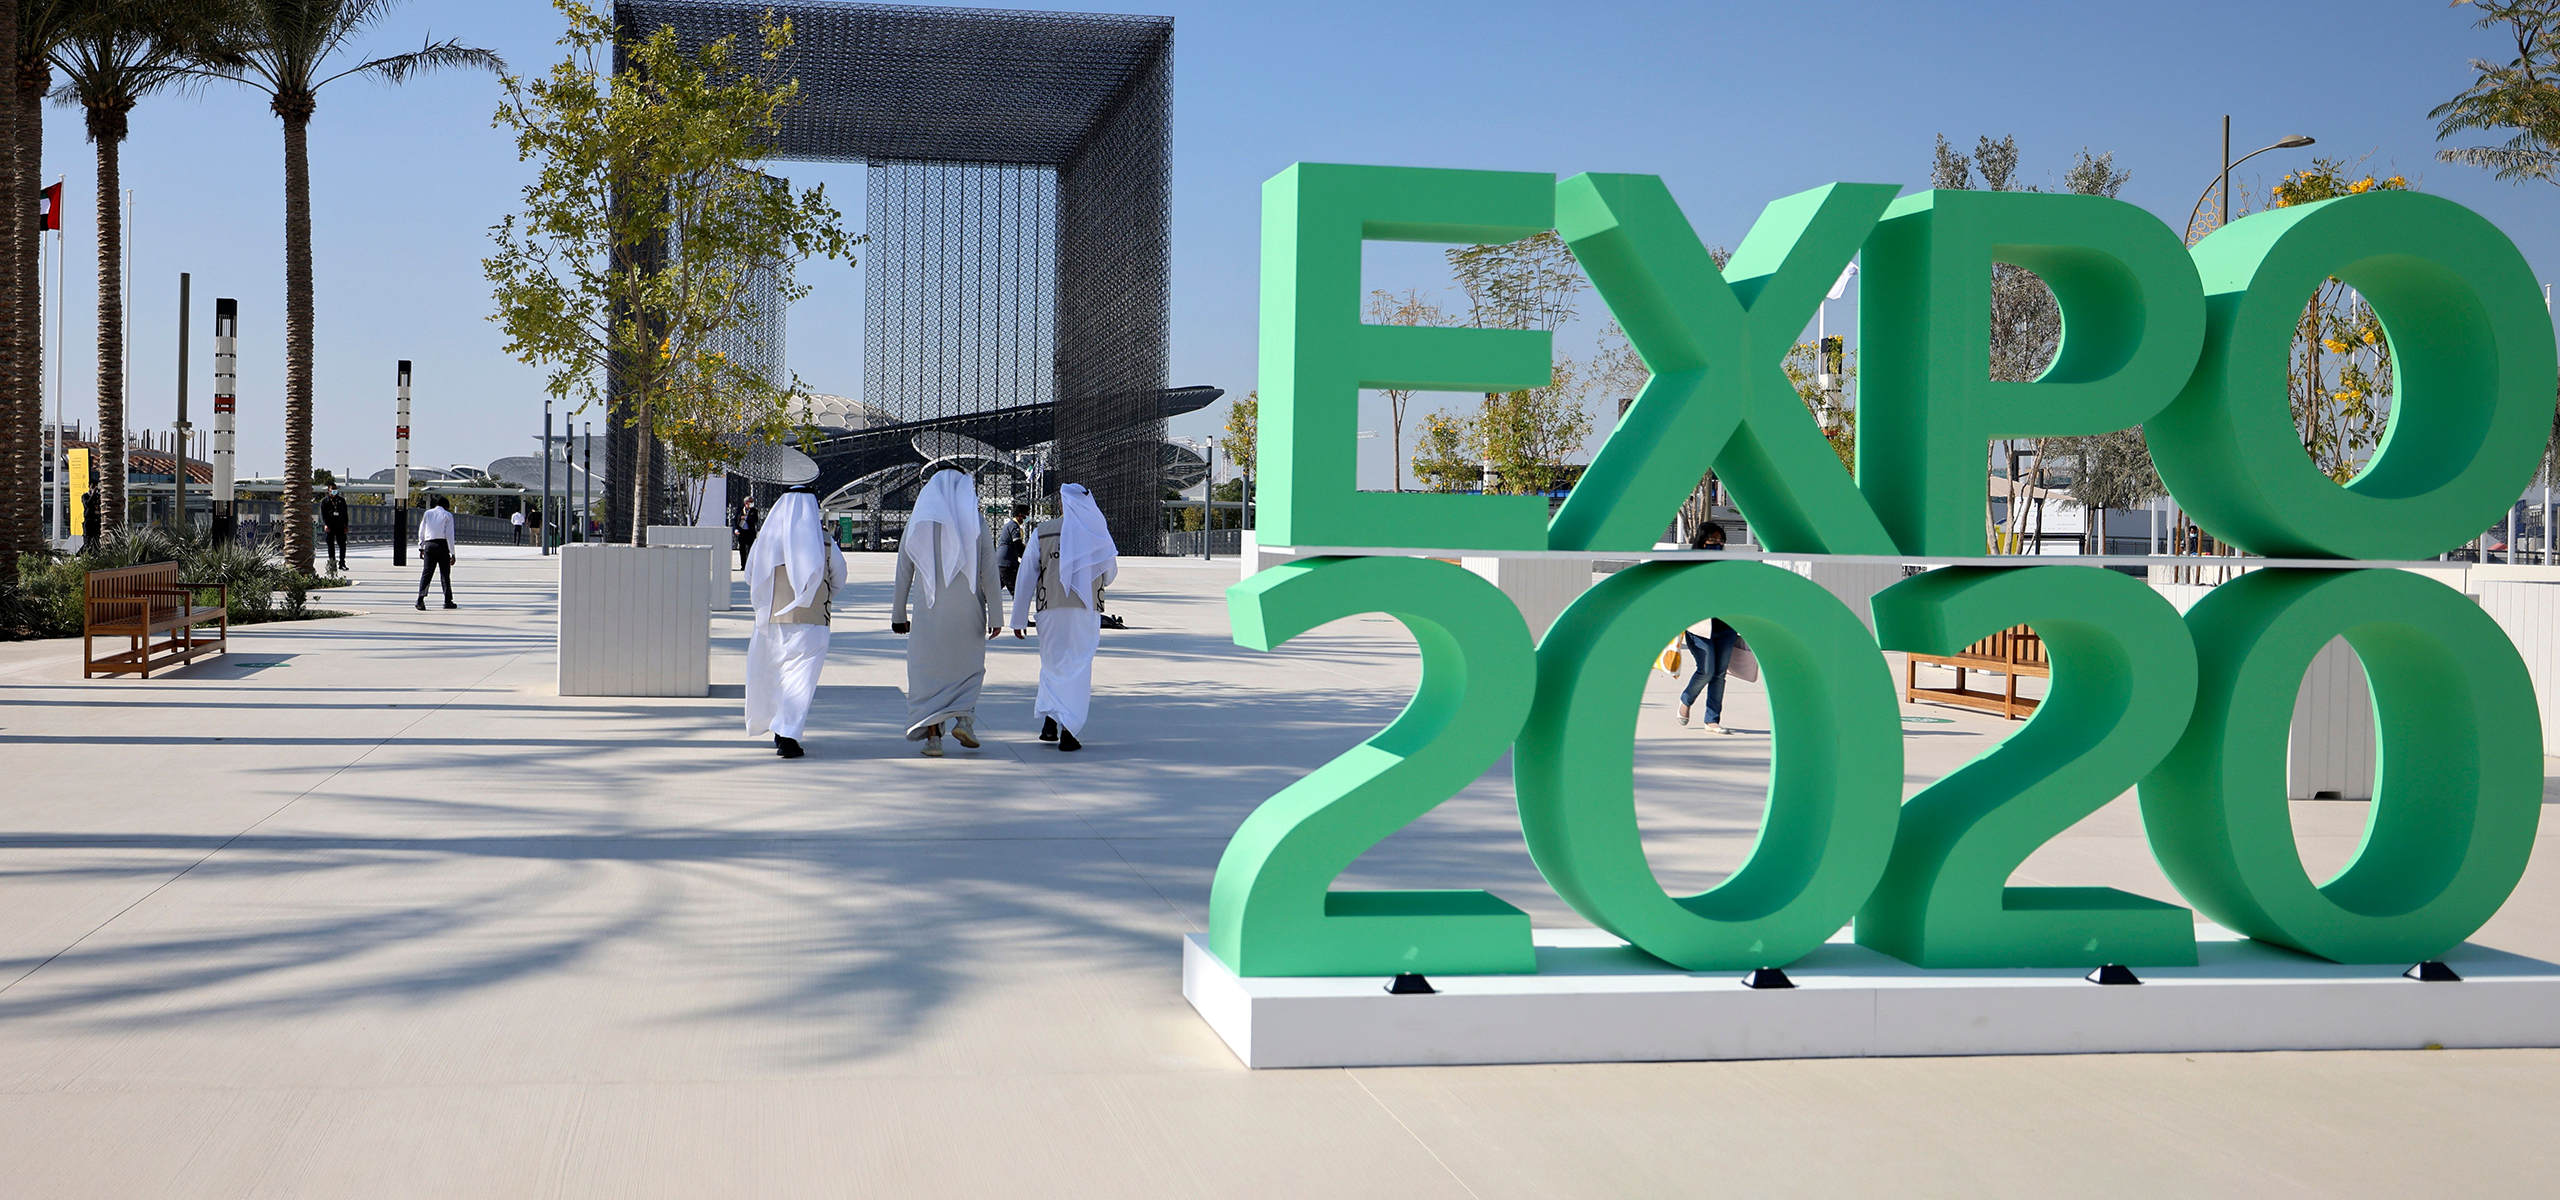 The Ultimate Guide to Expo 2020 Dubai